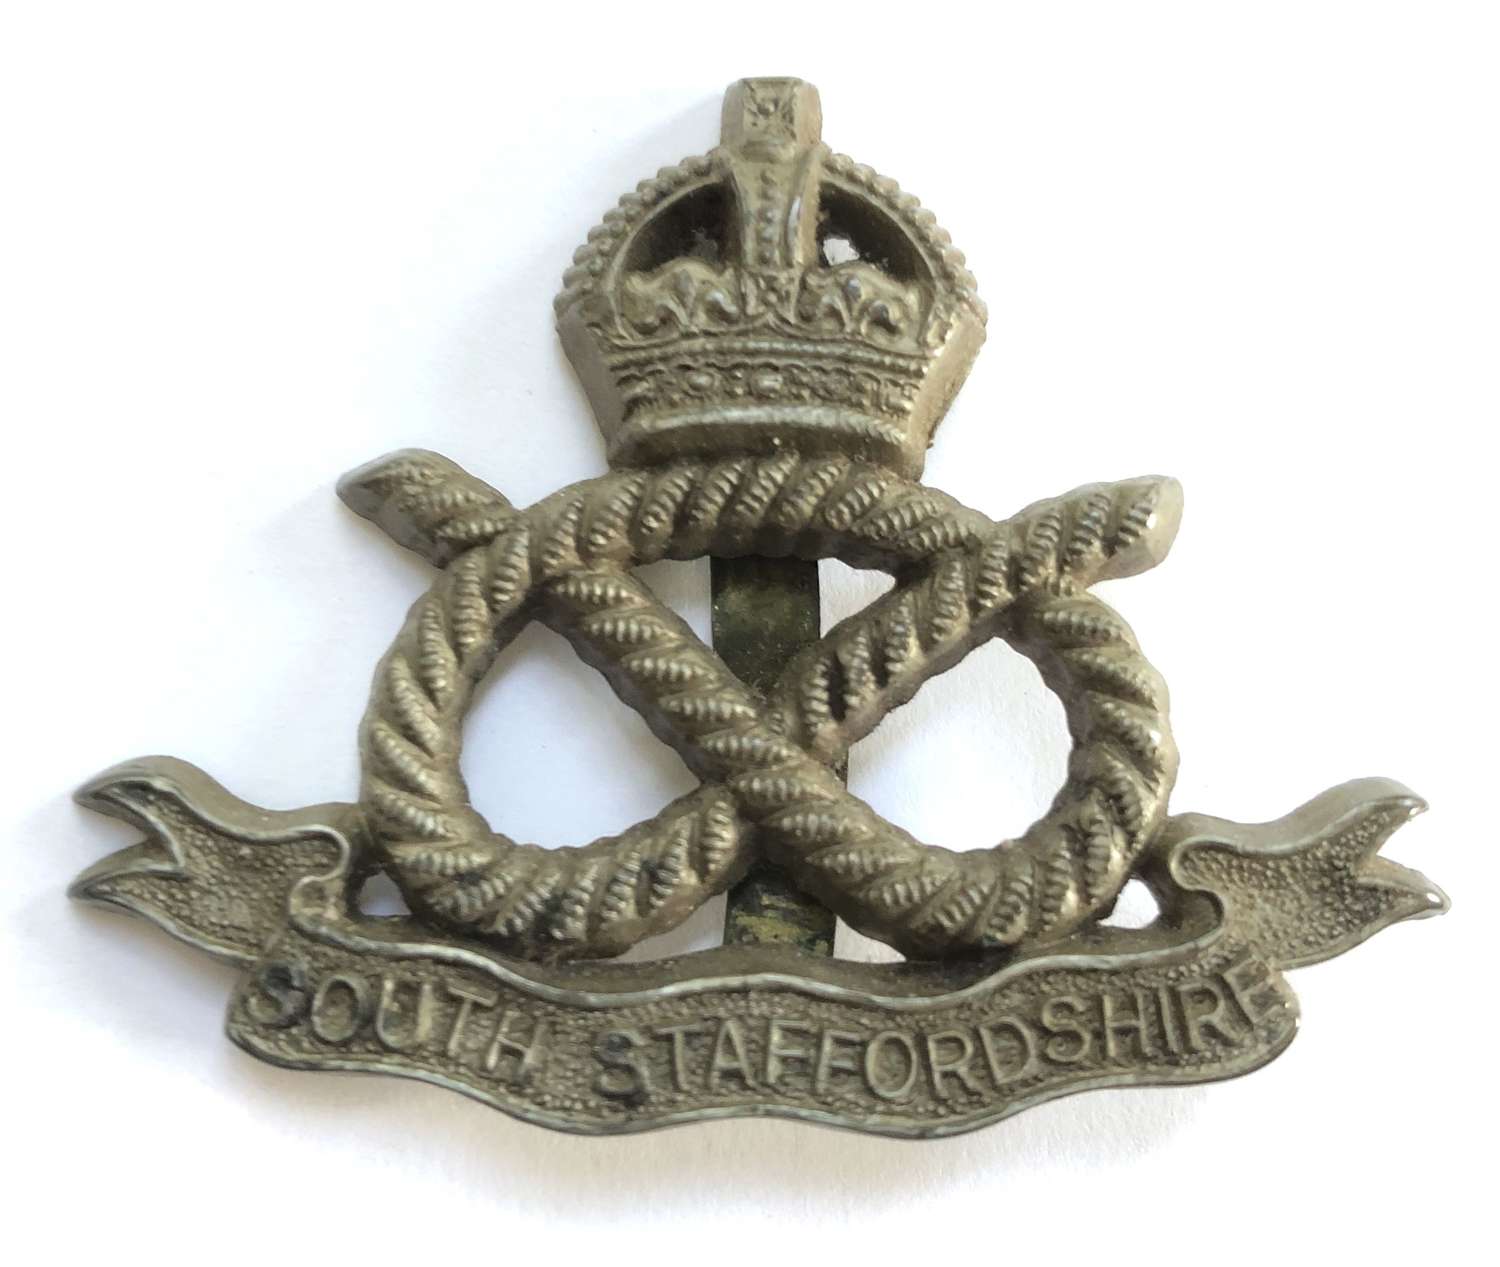 South Staffordshire Regiment WW2 plastic economy cap badge